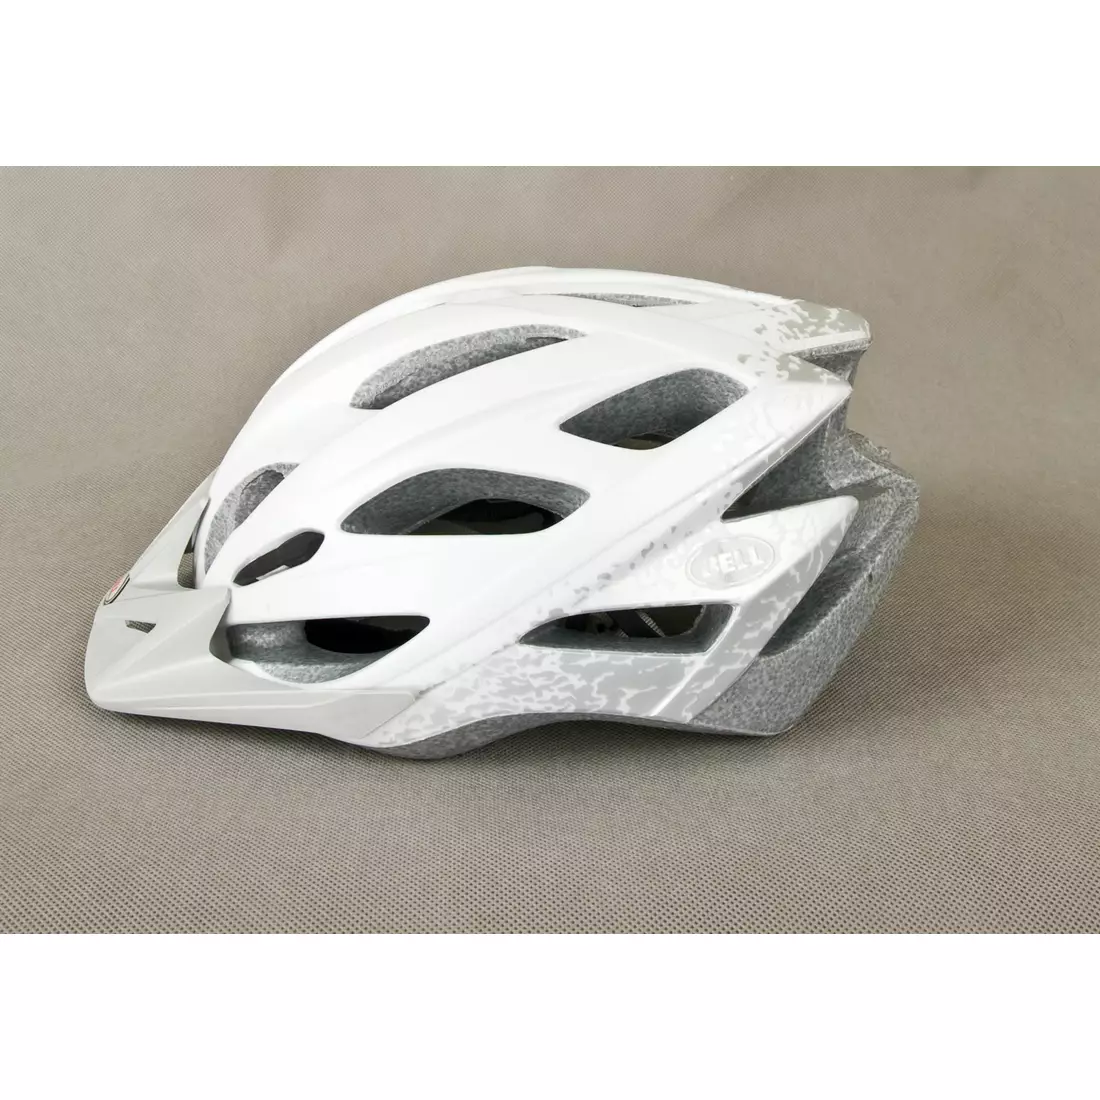 BELL SLANT white bicycle helmet